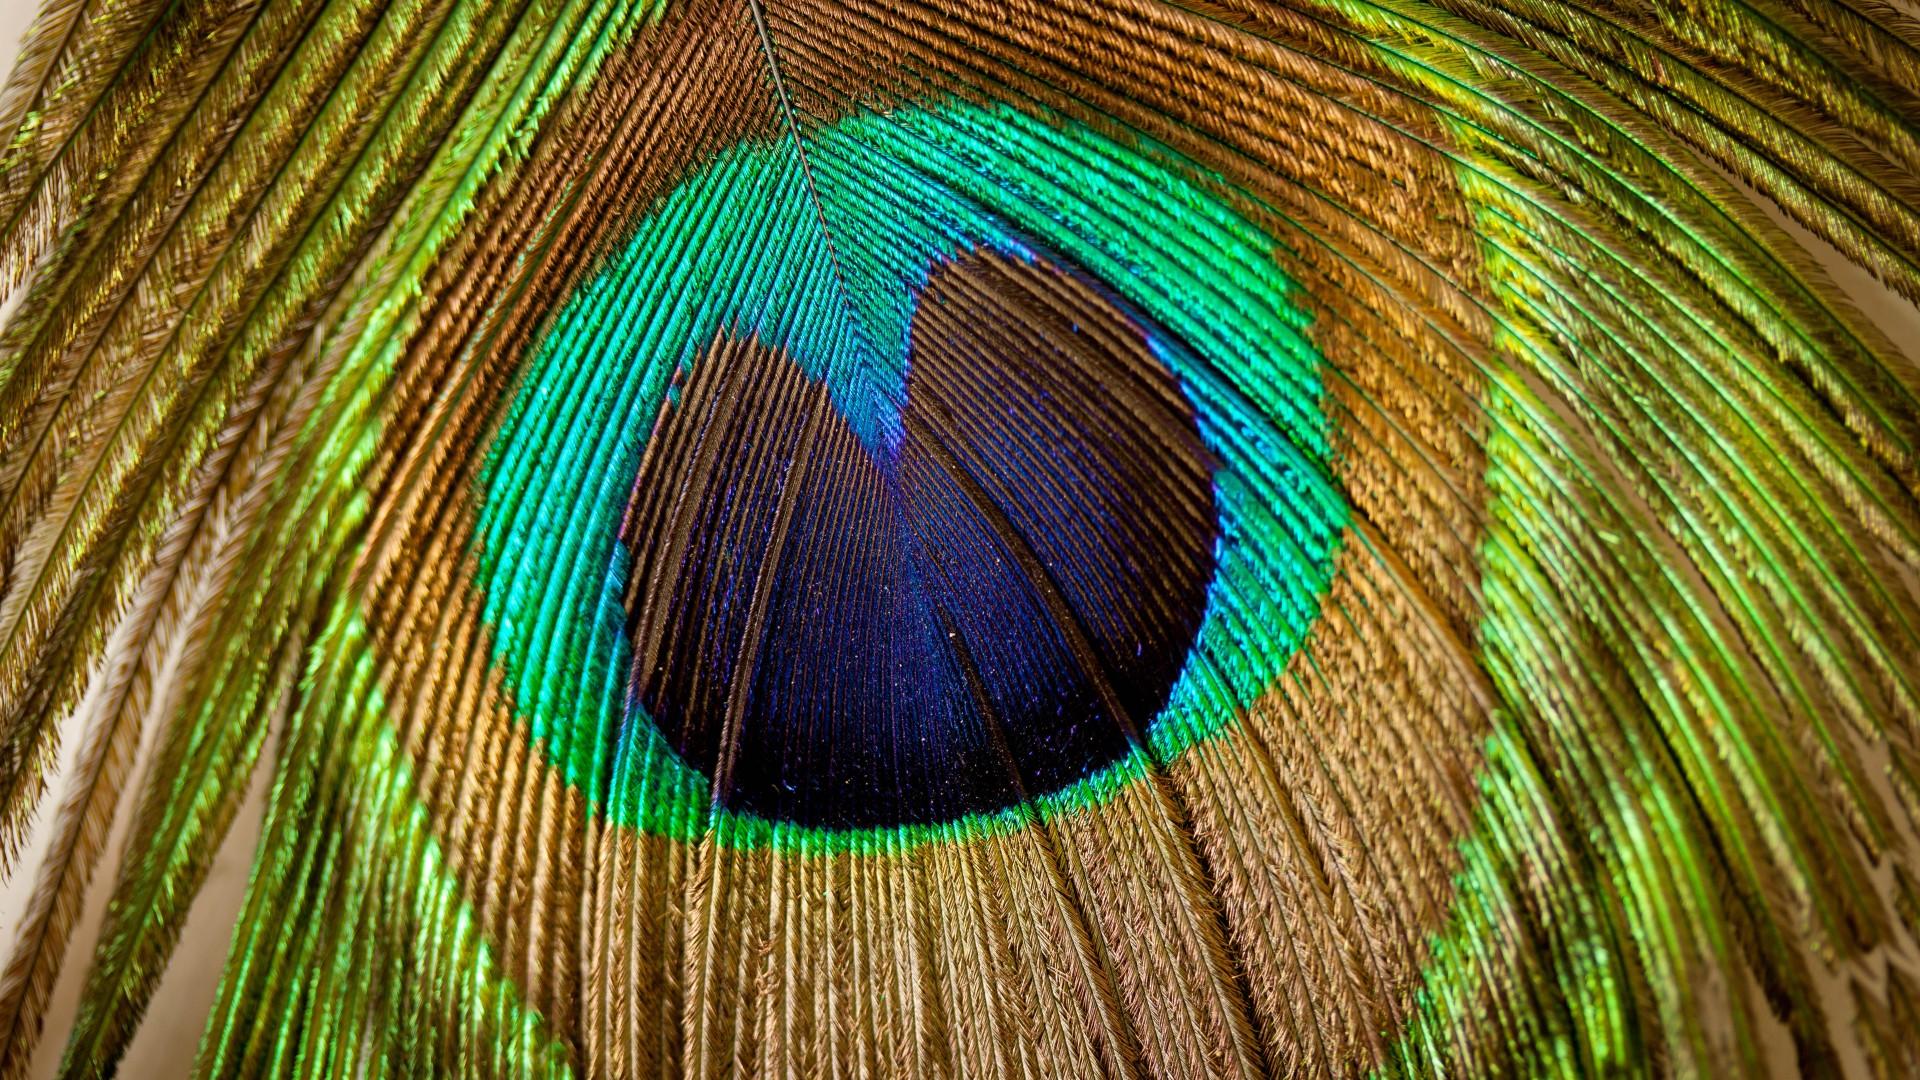 HD Peacock Feathers Fondos de pantalla